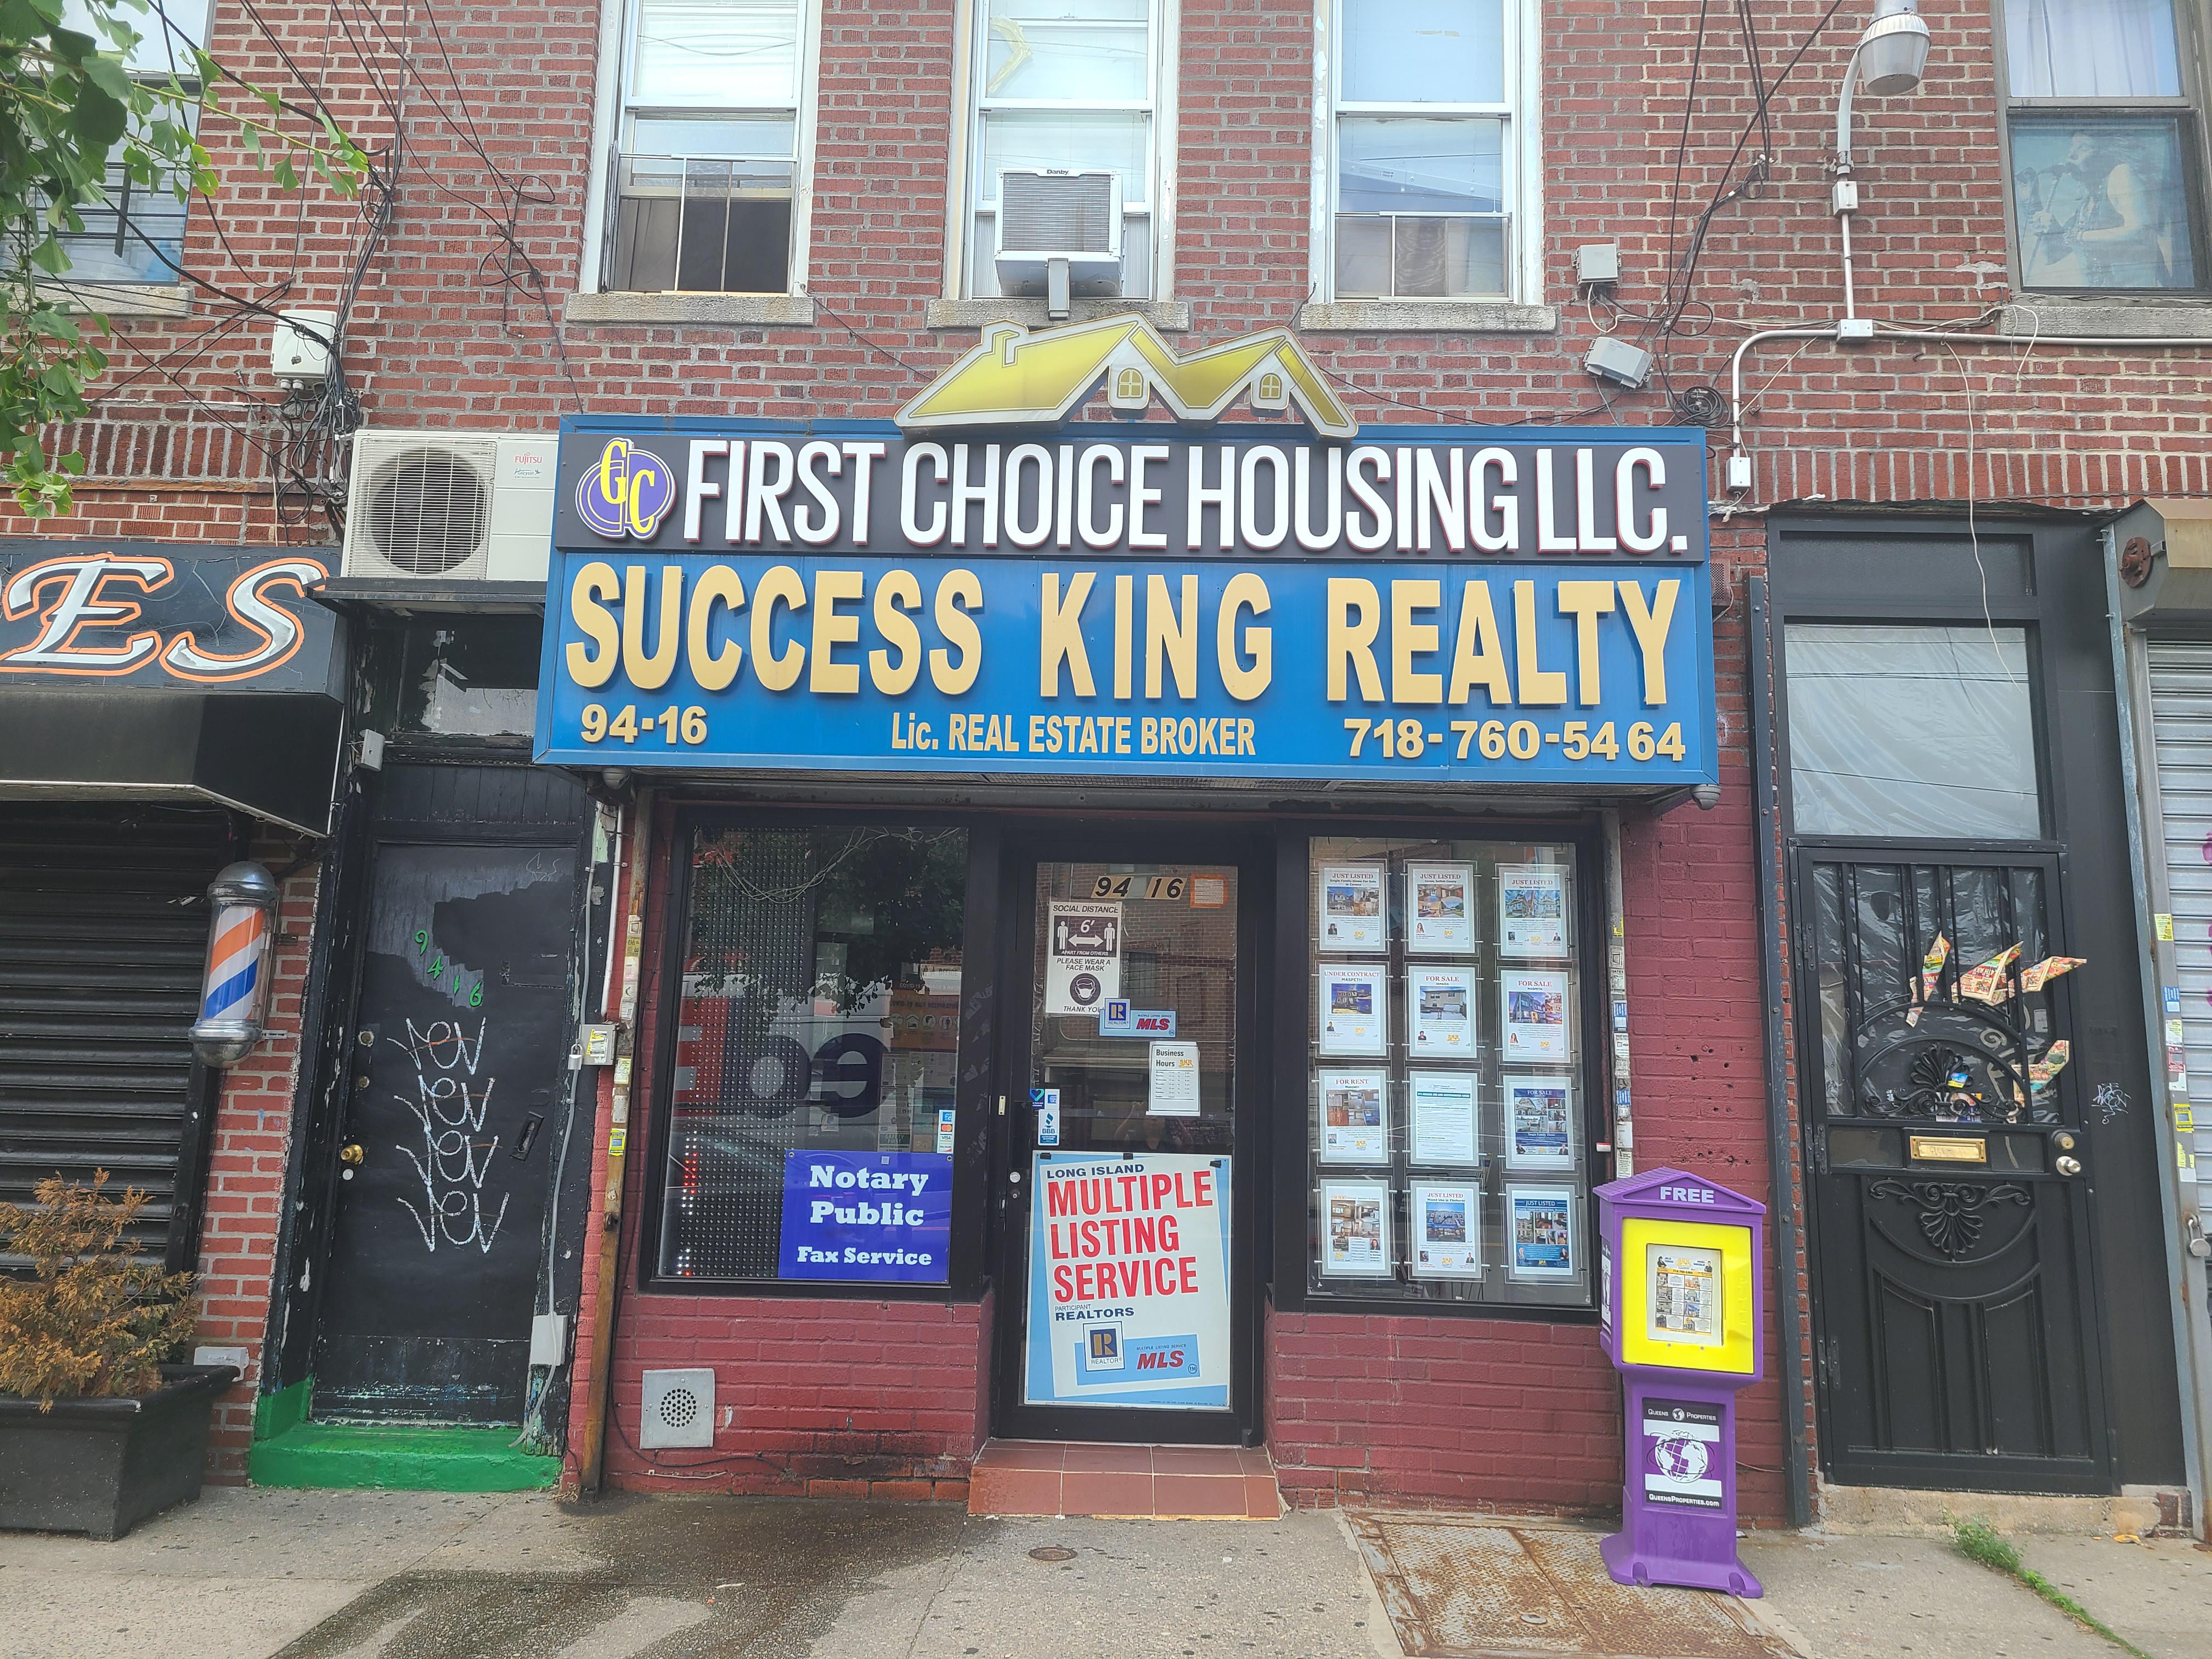 Success King Realty